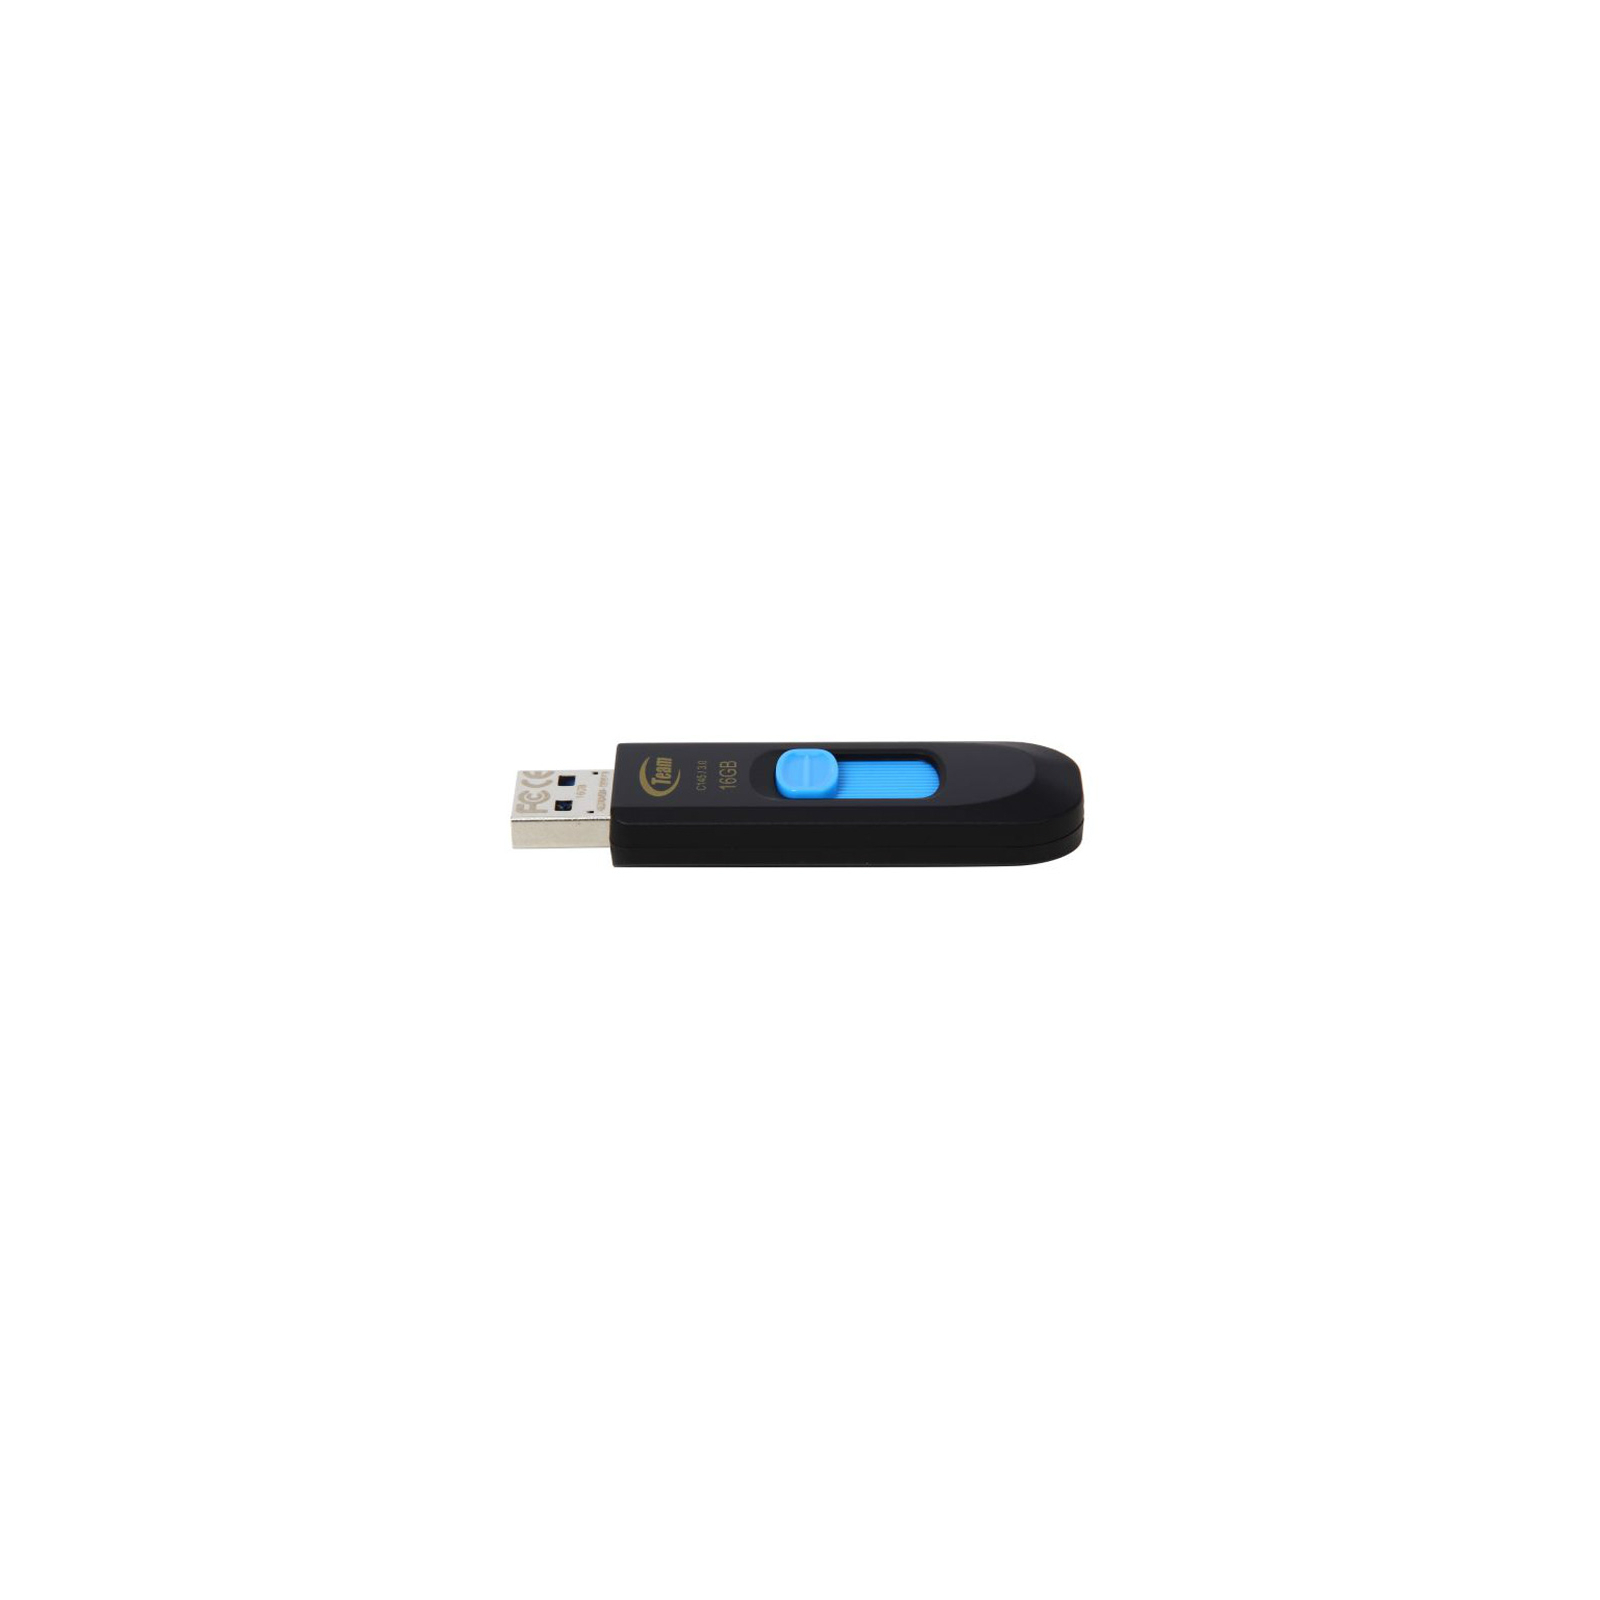 USB флеш накопитель Team 64GB C145 Green USB 3.0 (TC145364GG01) изображение 3